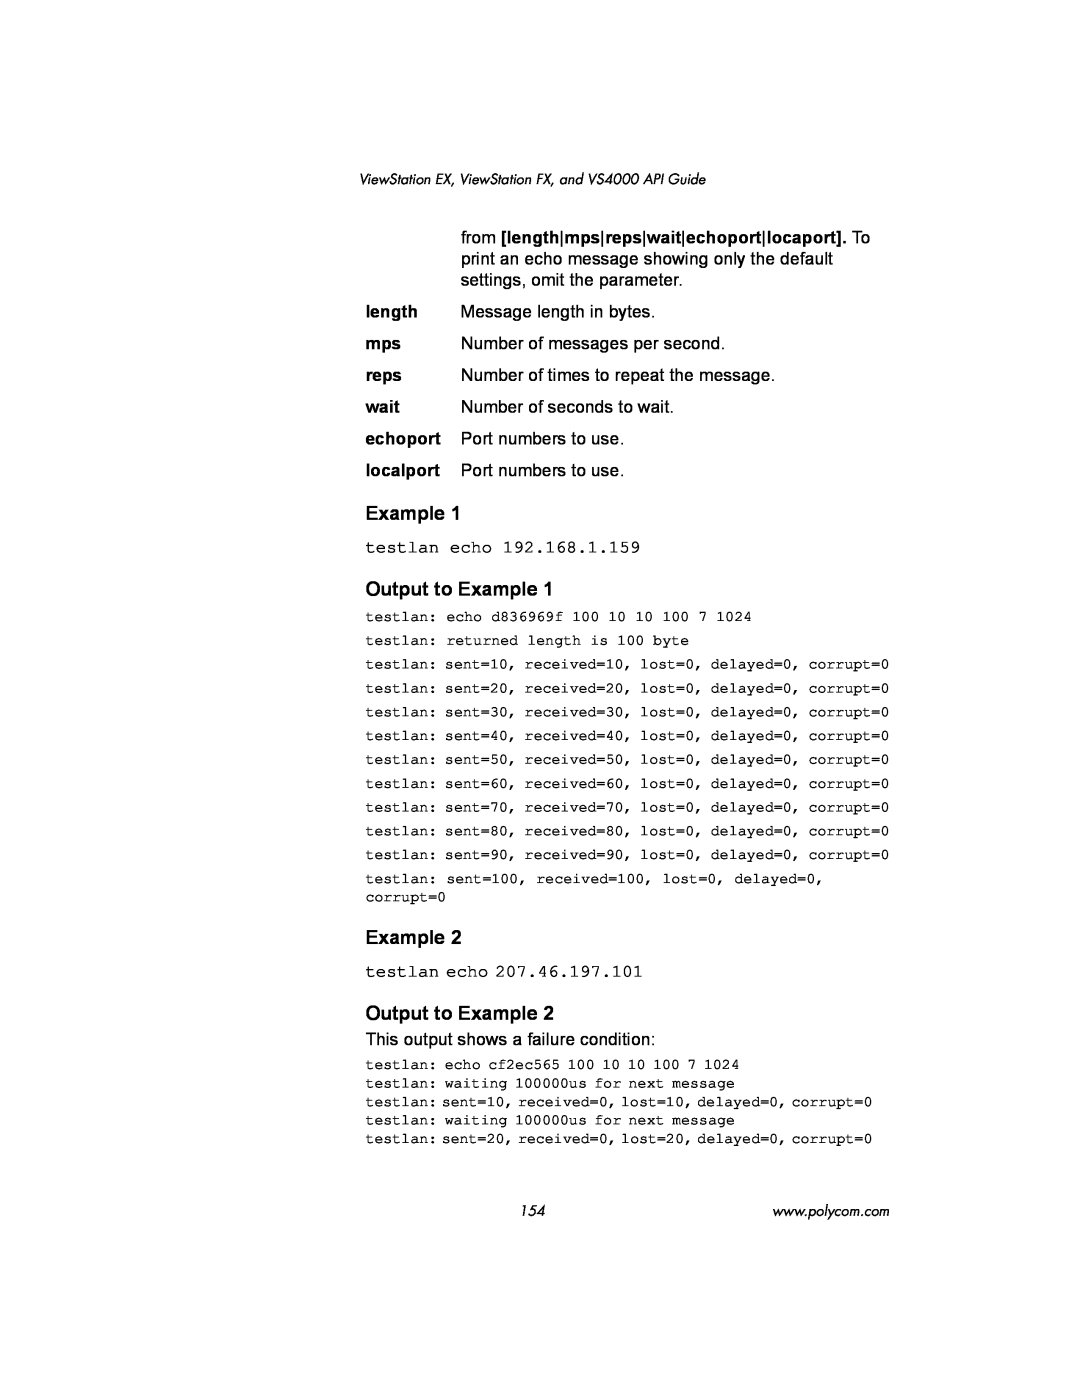 Polycom VIEWSTATION EX manual Output to Example 